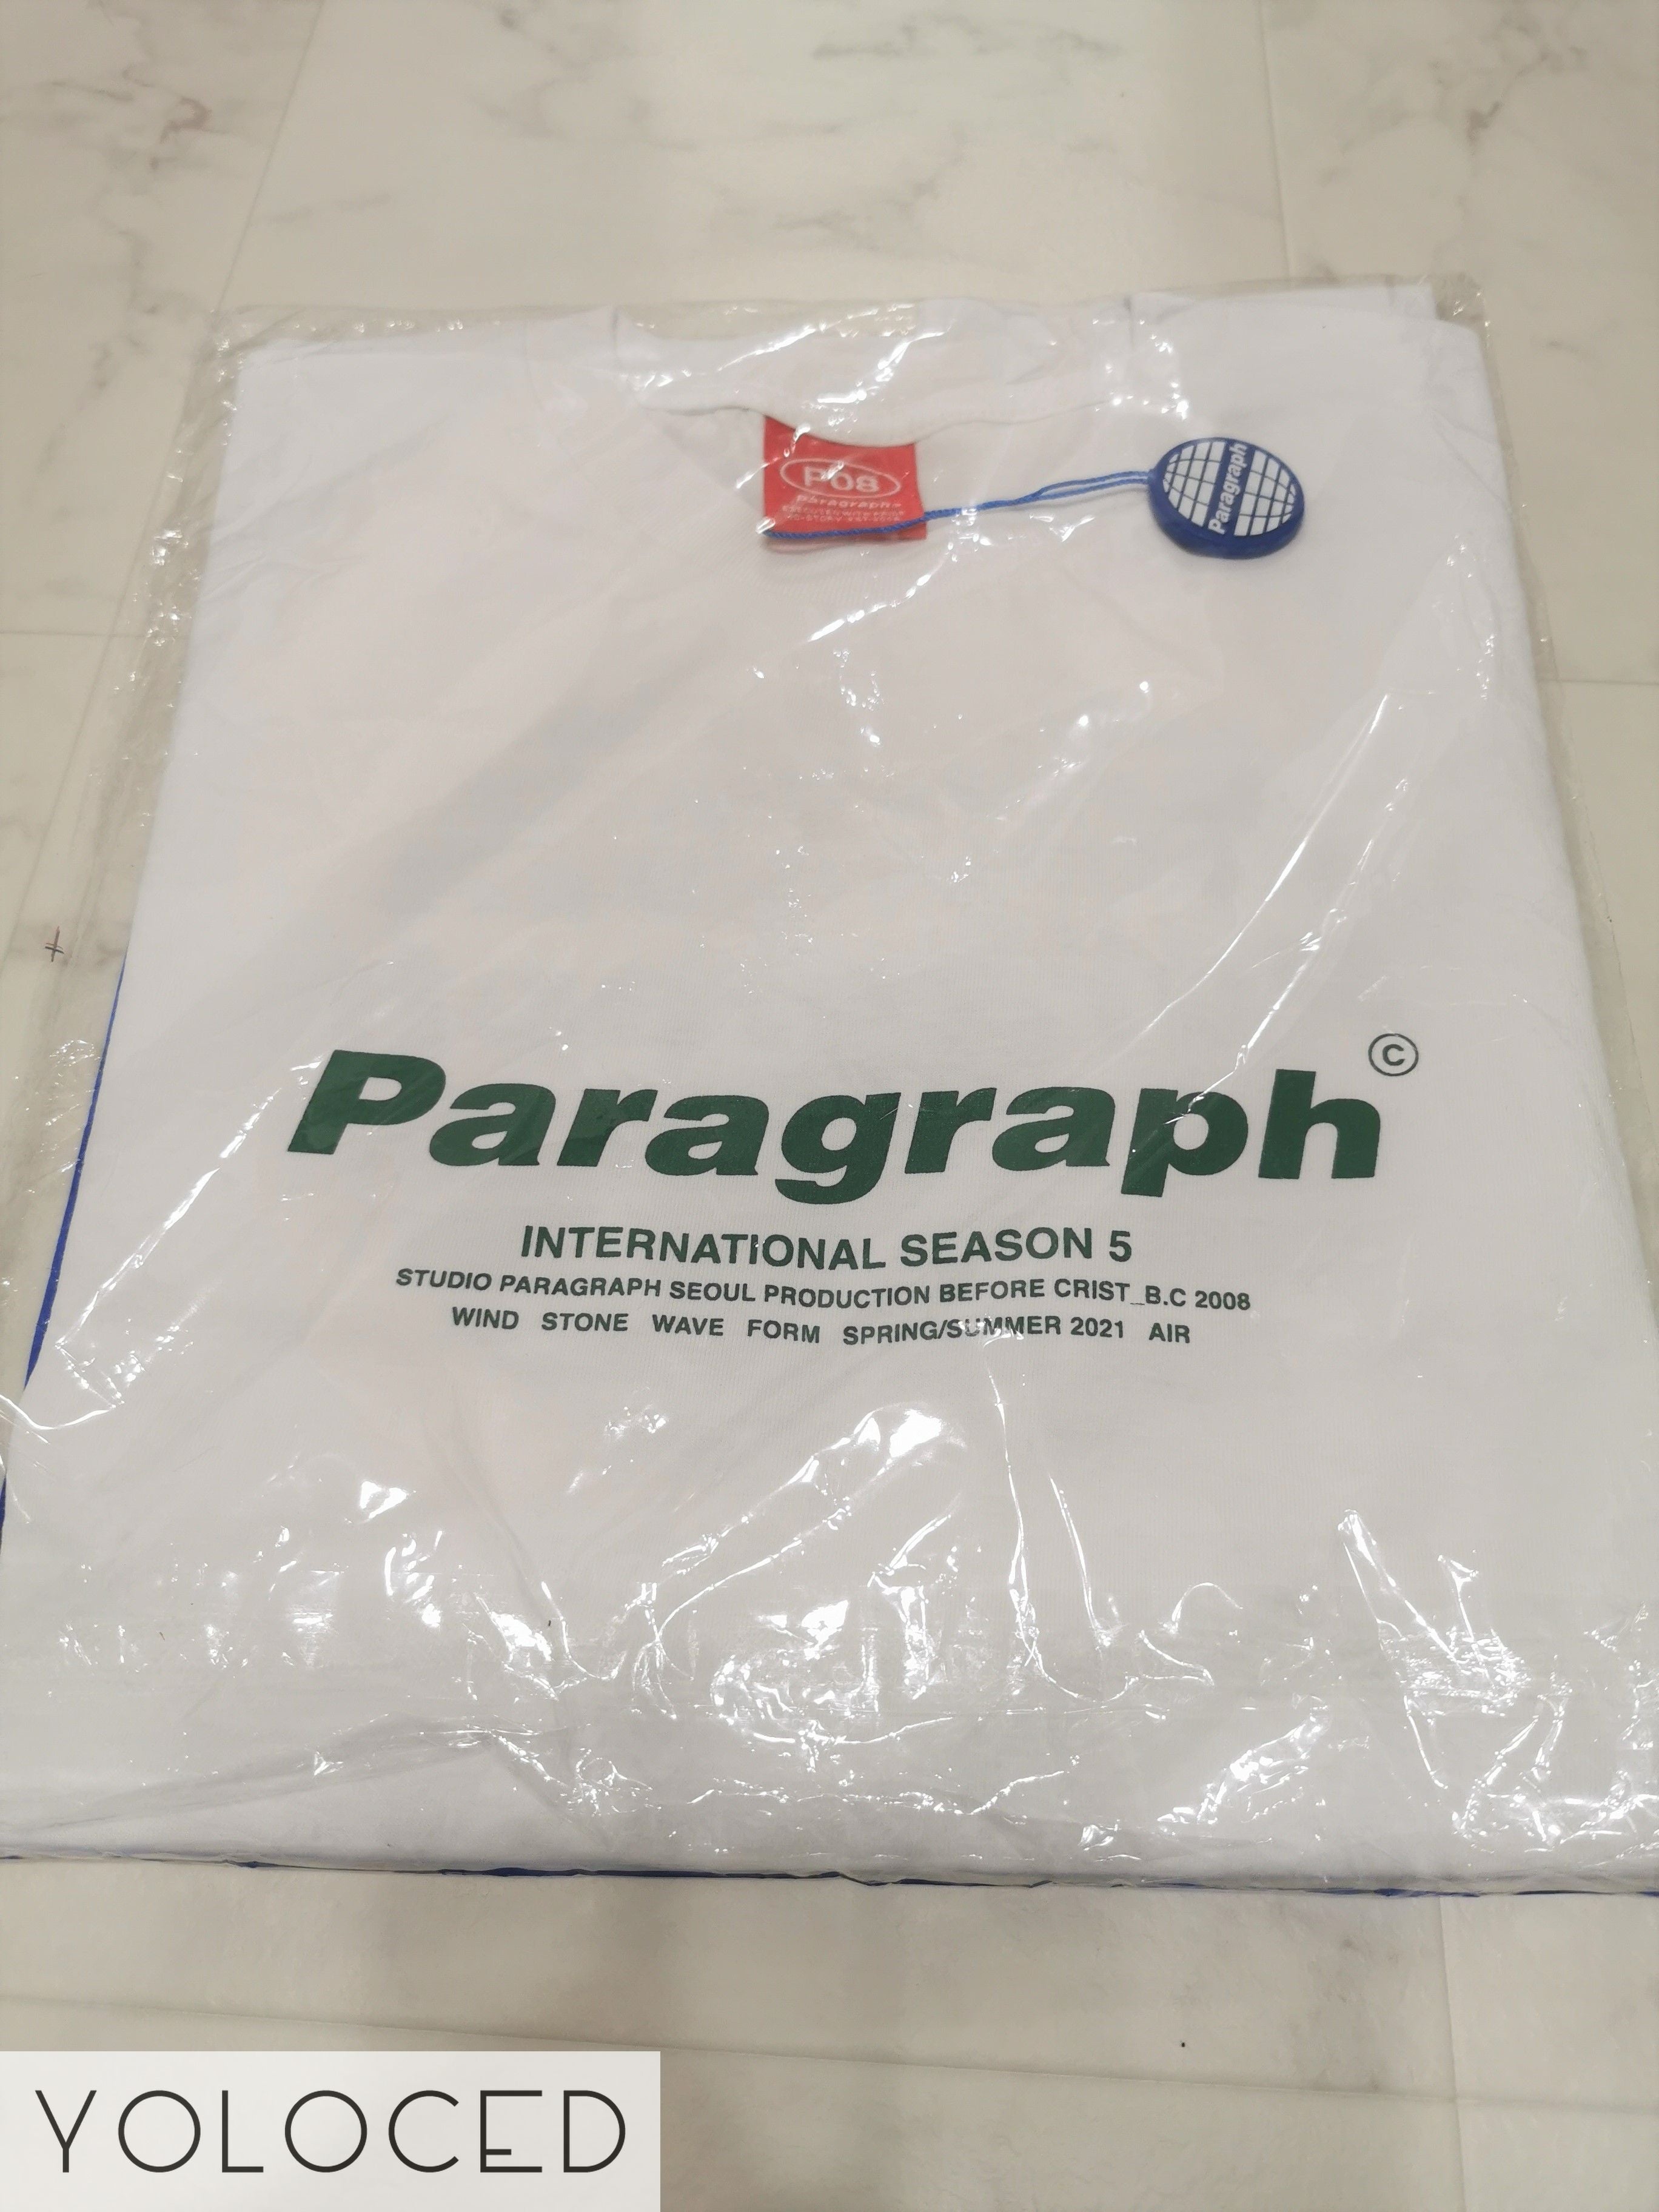 PARAGRAPH/21SS 地球儀ロゴ半袖Tシャツ